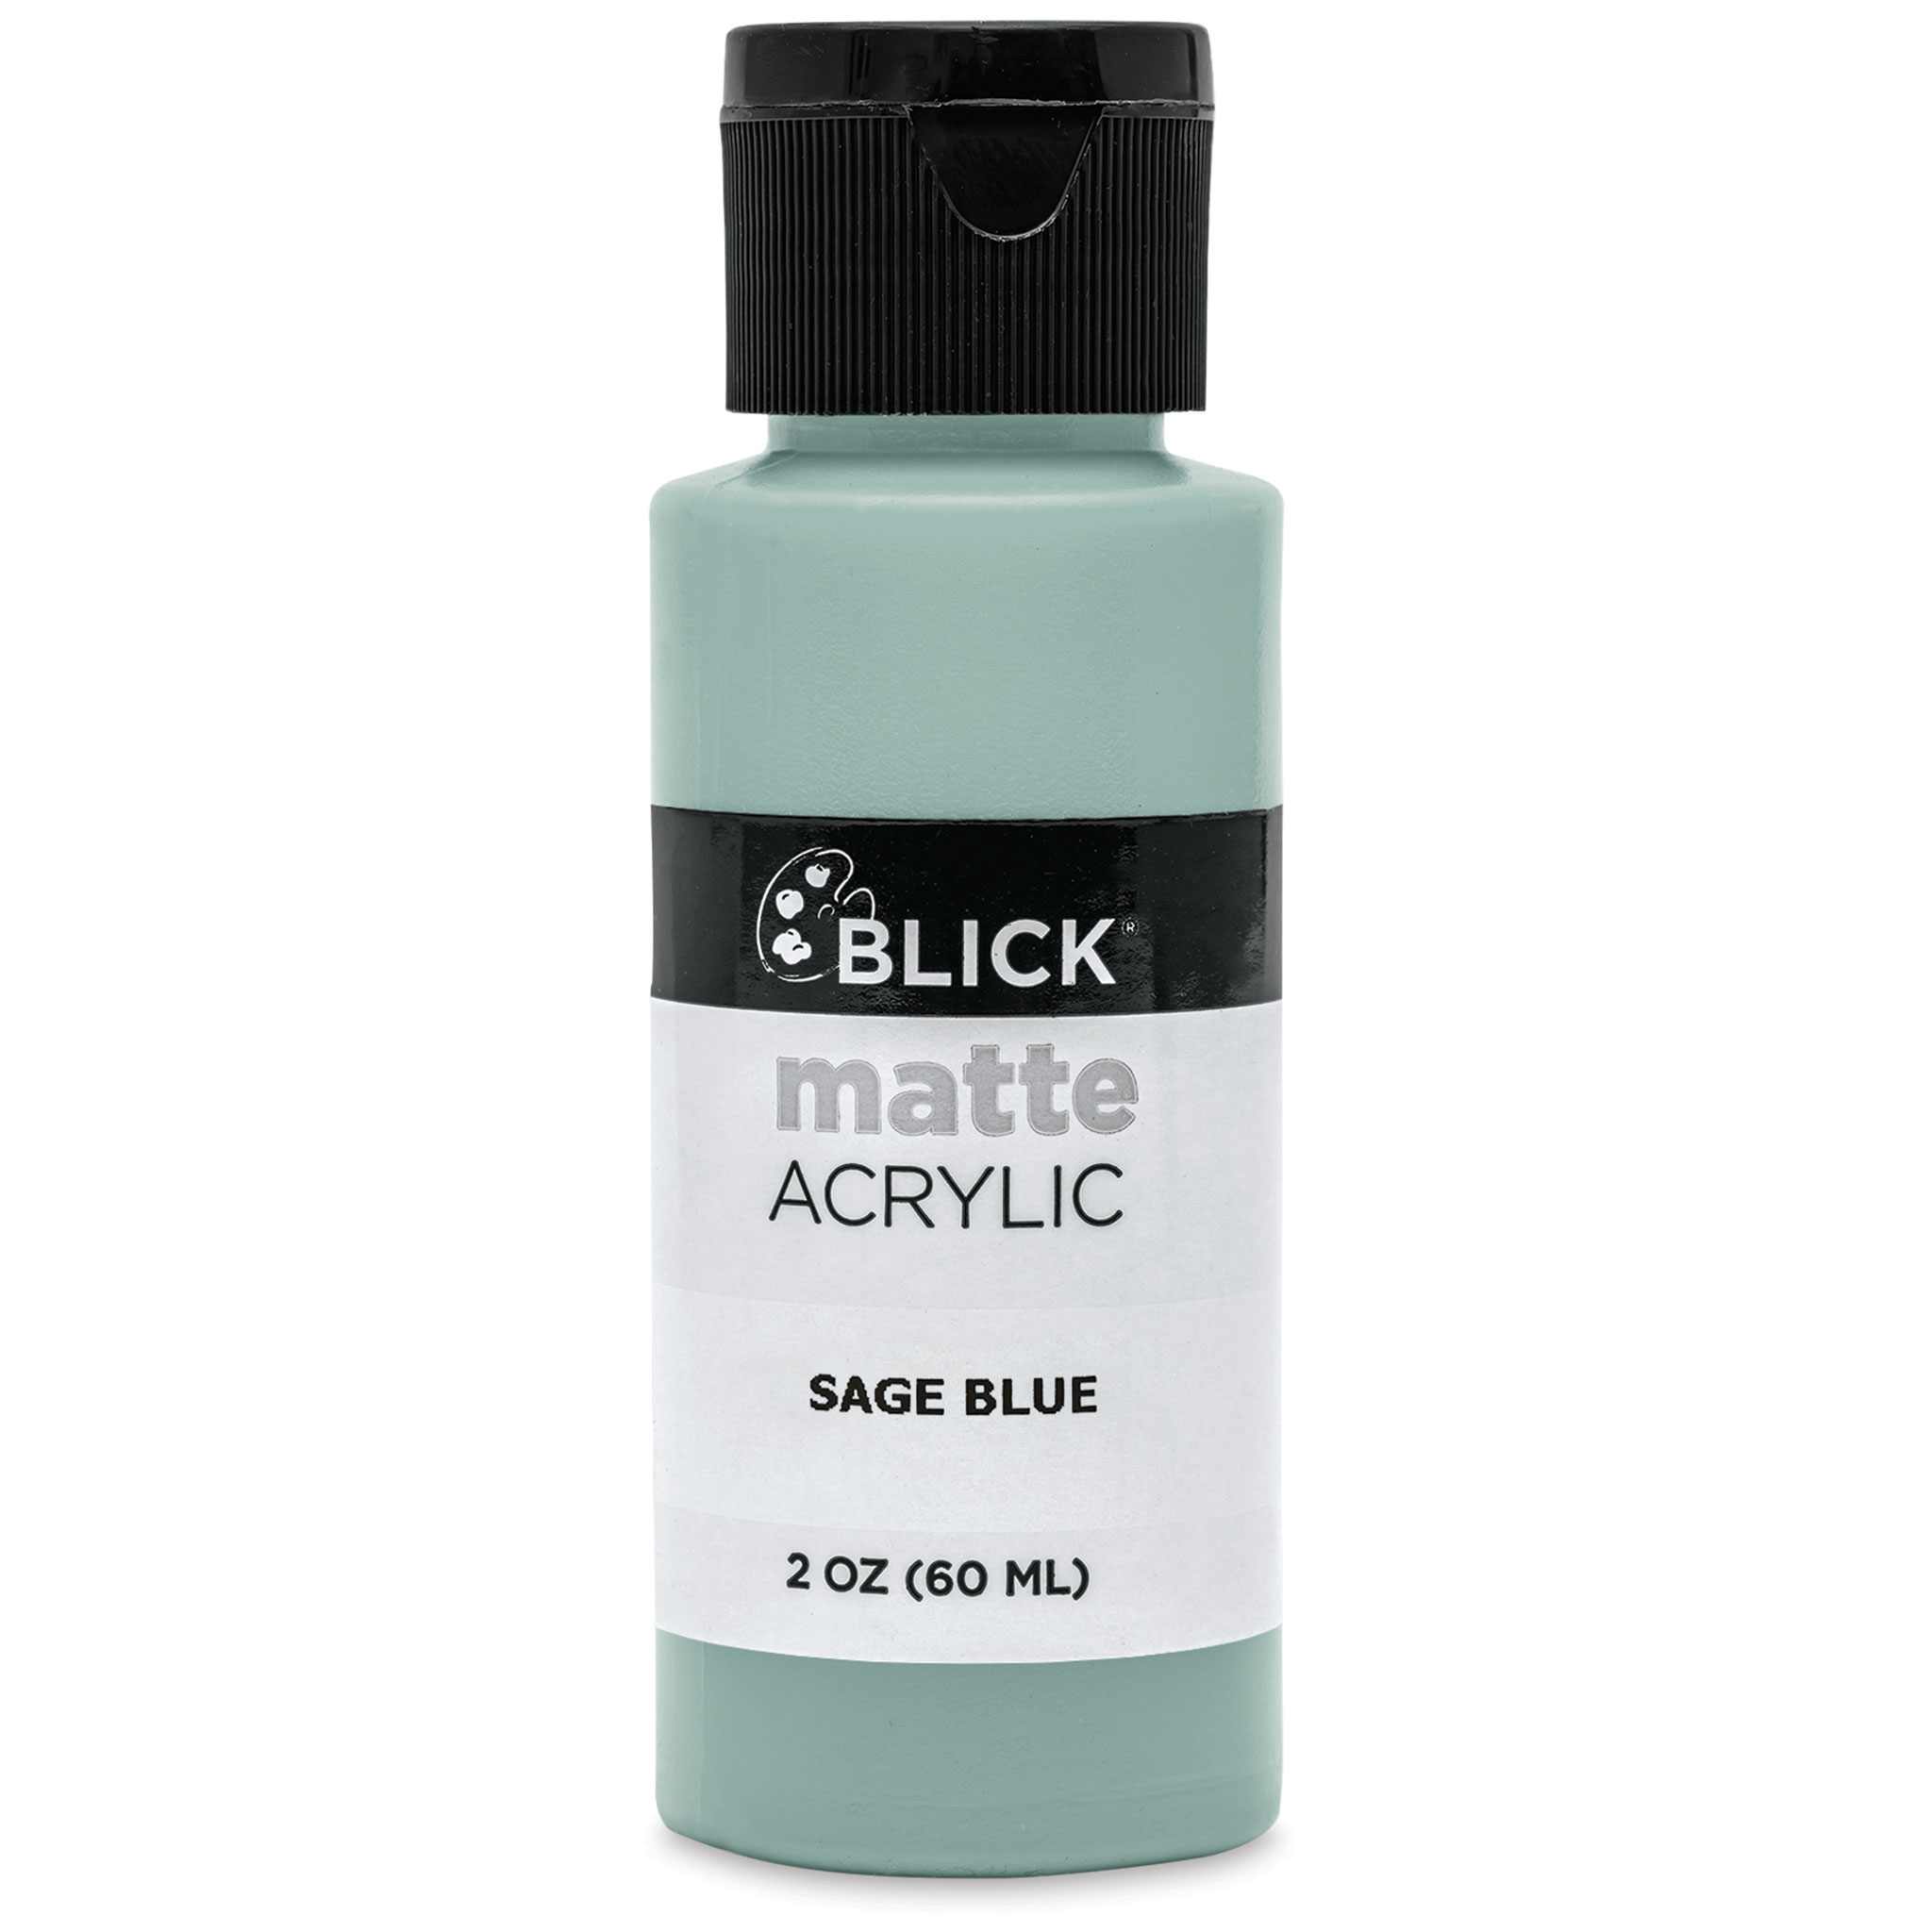 Blick Matte Acrylics - Basic Colors, Set of 7, 2 oz bottles